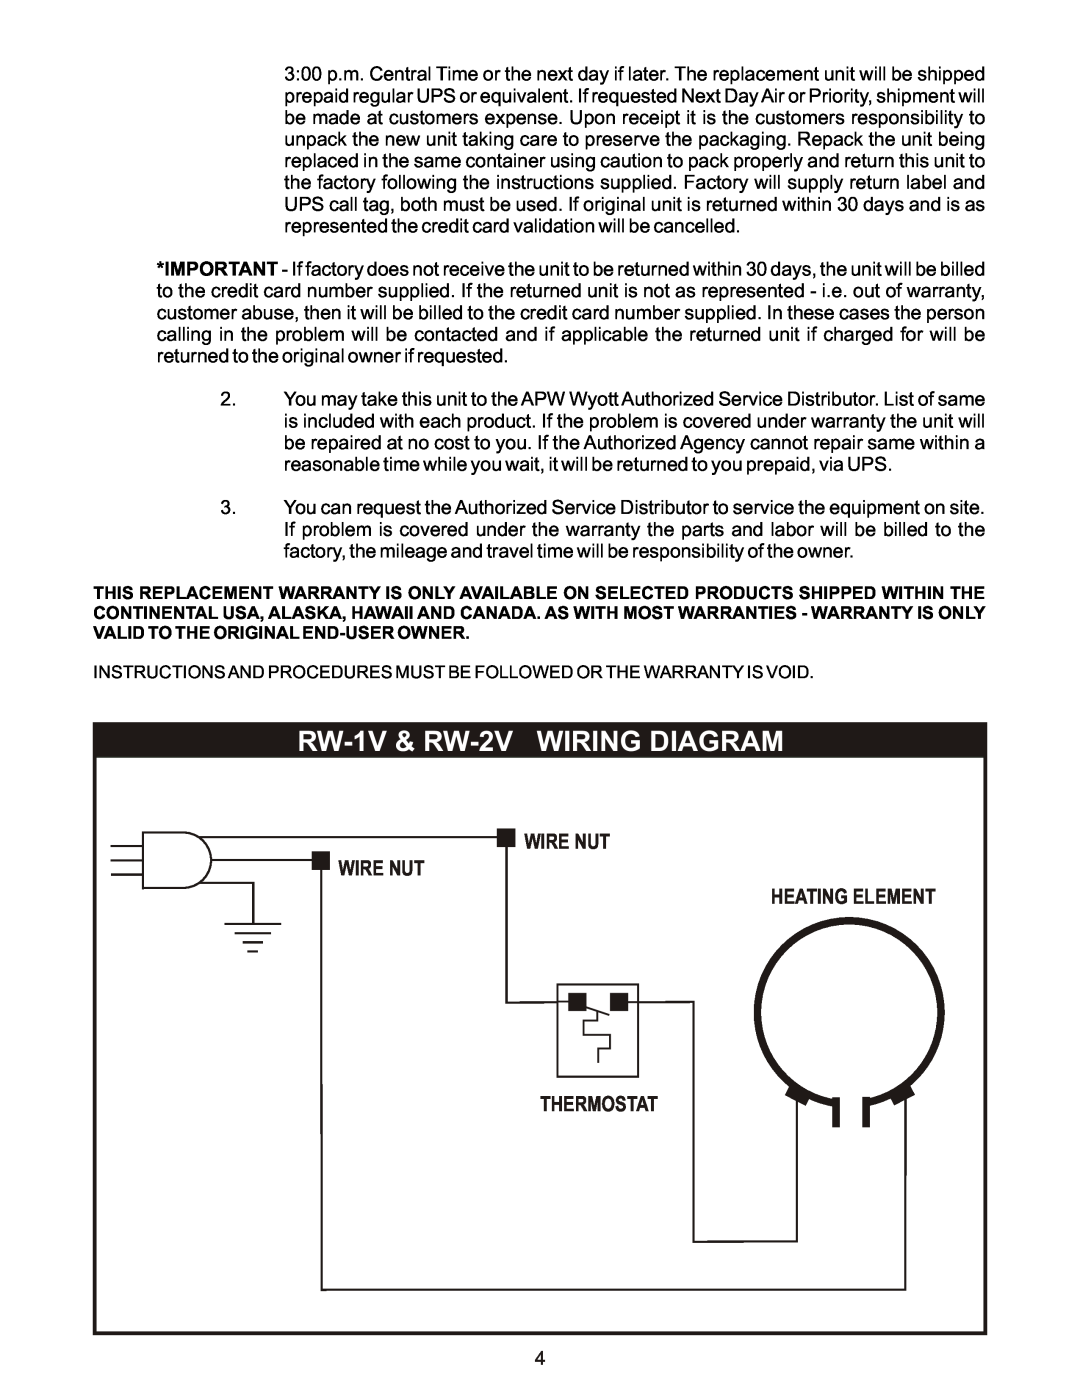 APW Wyott manual RW-1V& RW-2VWIRING DIAGRAM, Wire Nut Wire Nut Heating Element Thermostat 